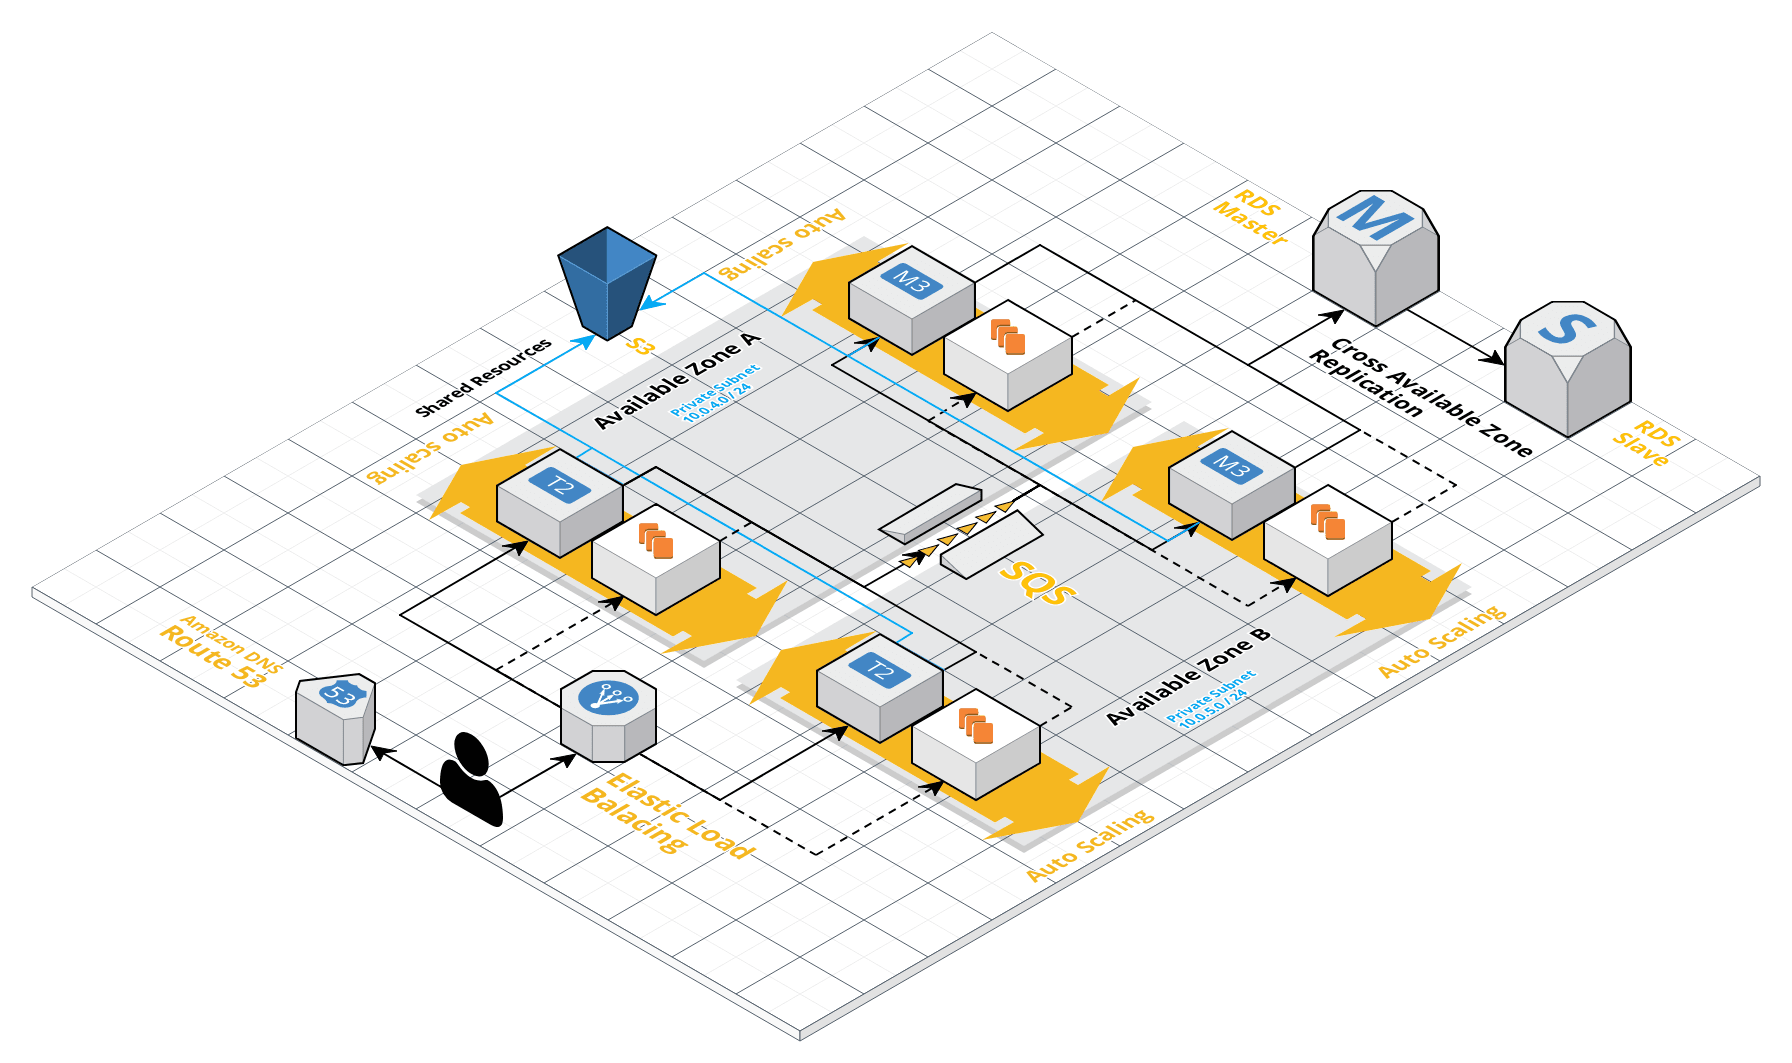 Cloudcraft - AWS environment architecture diagrams